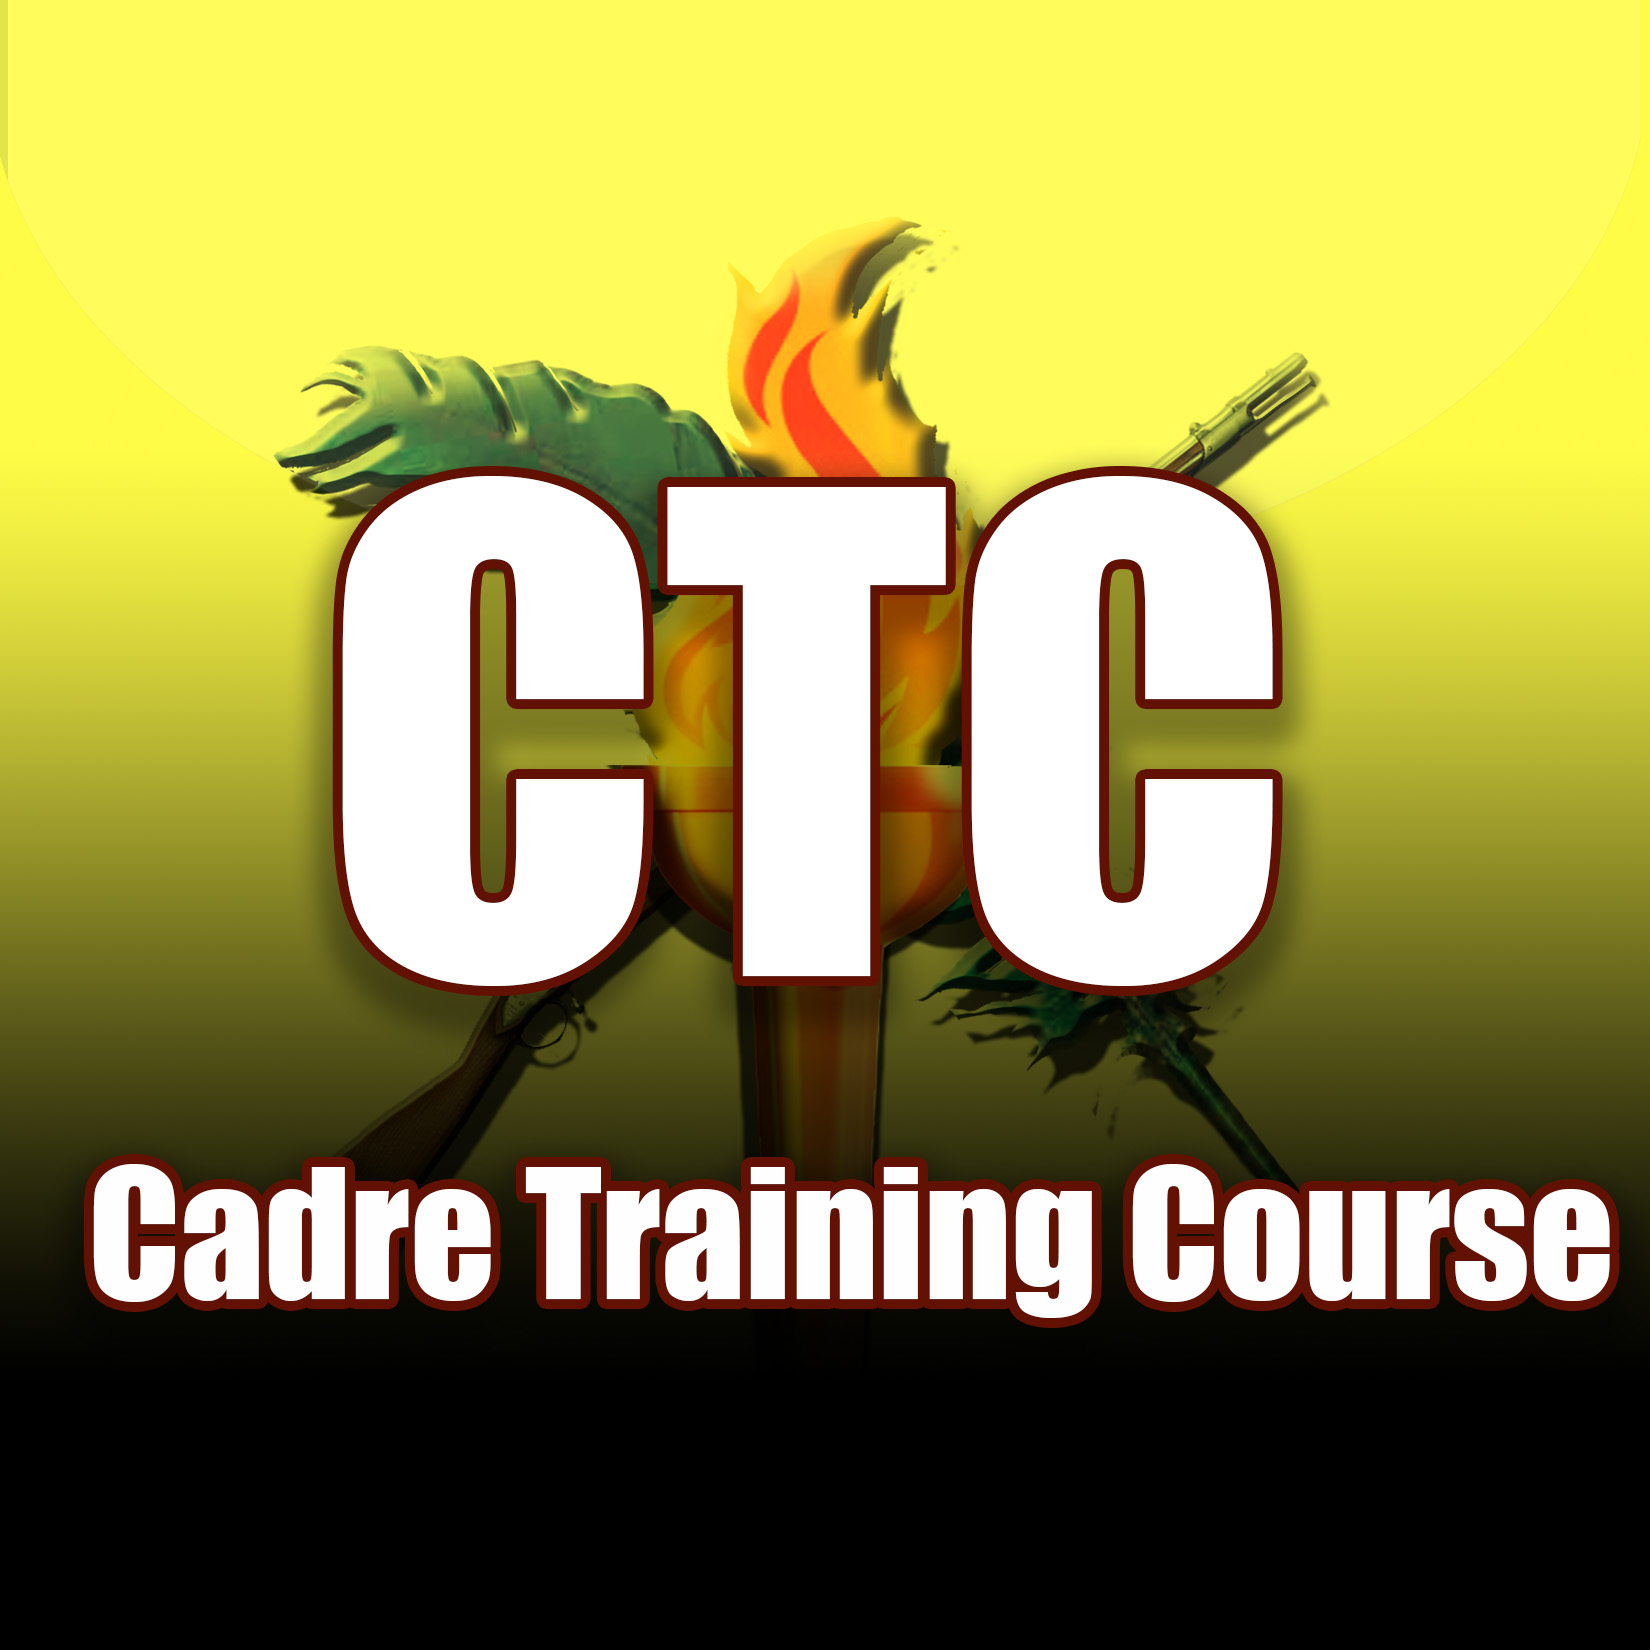 Cadre Training Course